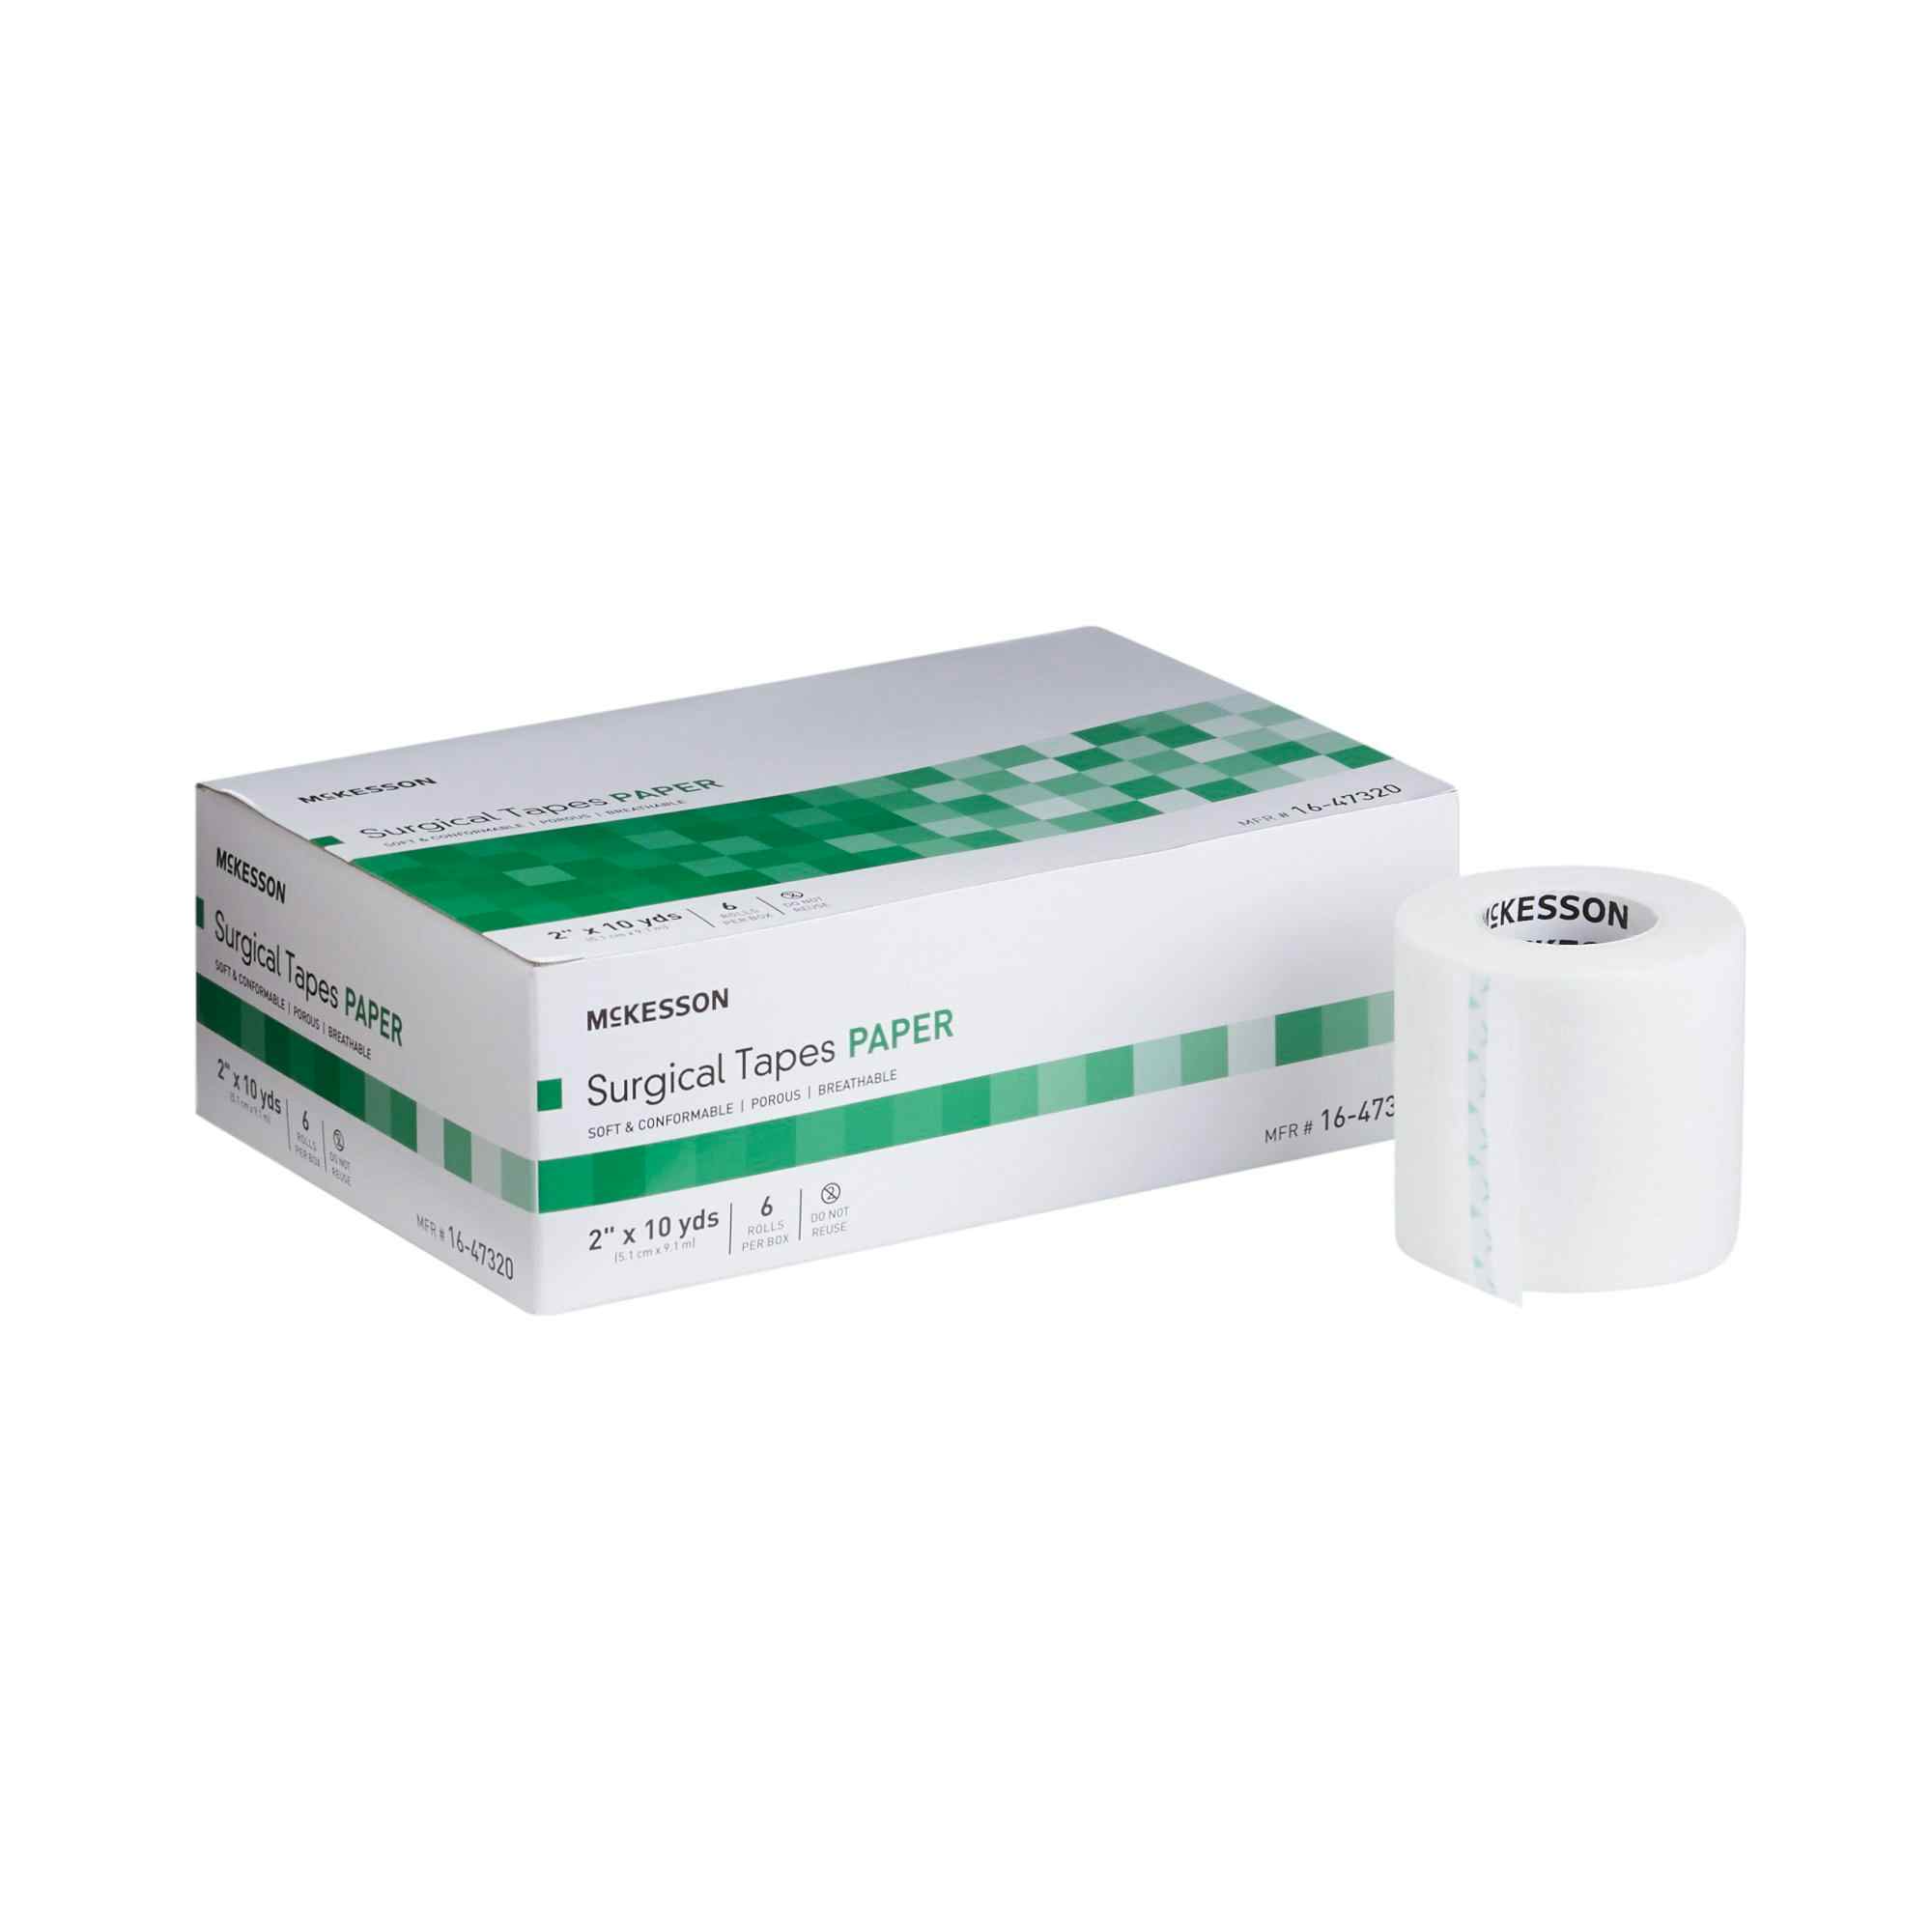 McKesson Paper Medical Tape, 2"x 10 yd, 16-47320, Box of 6